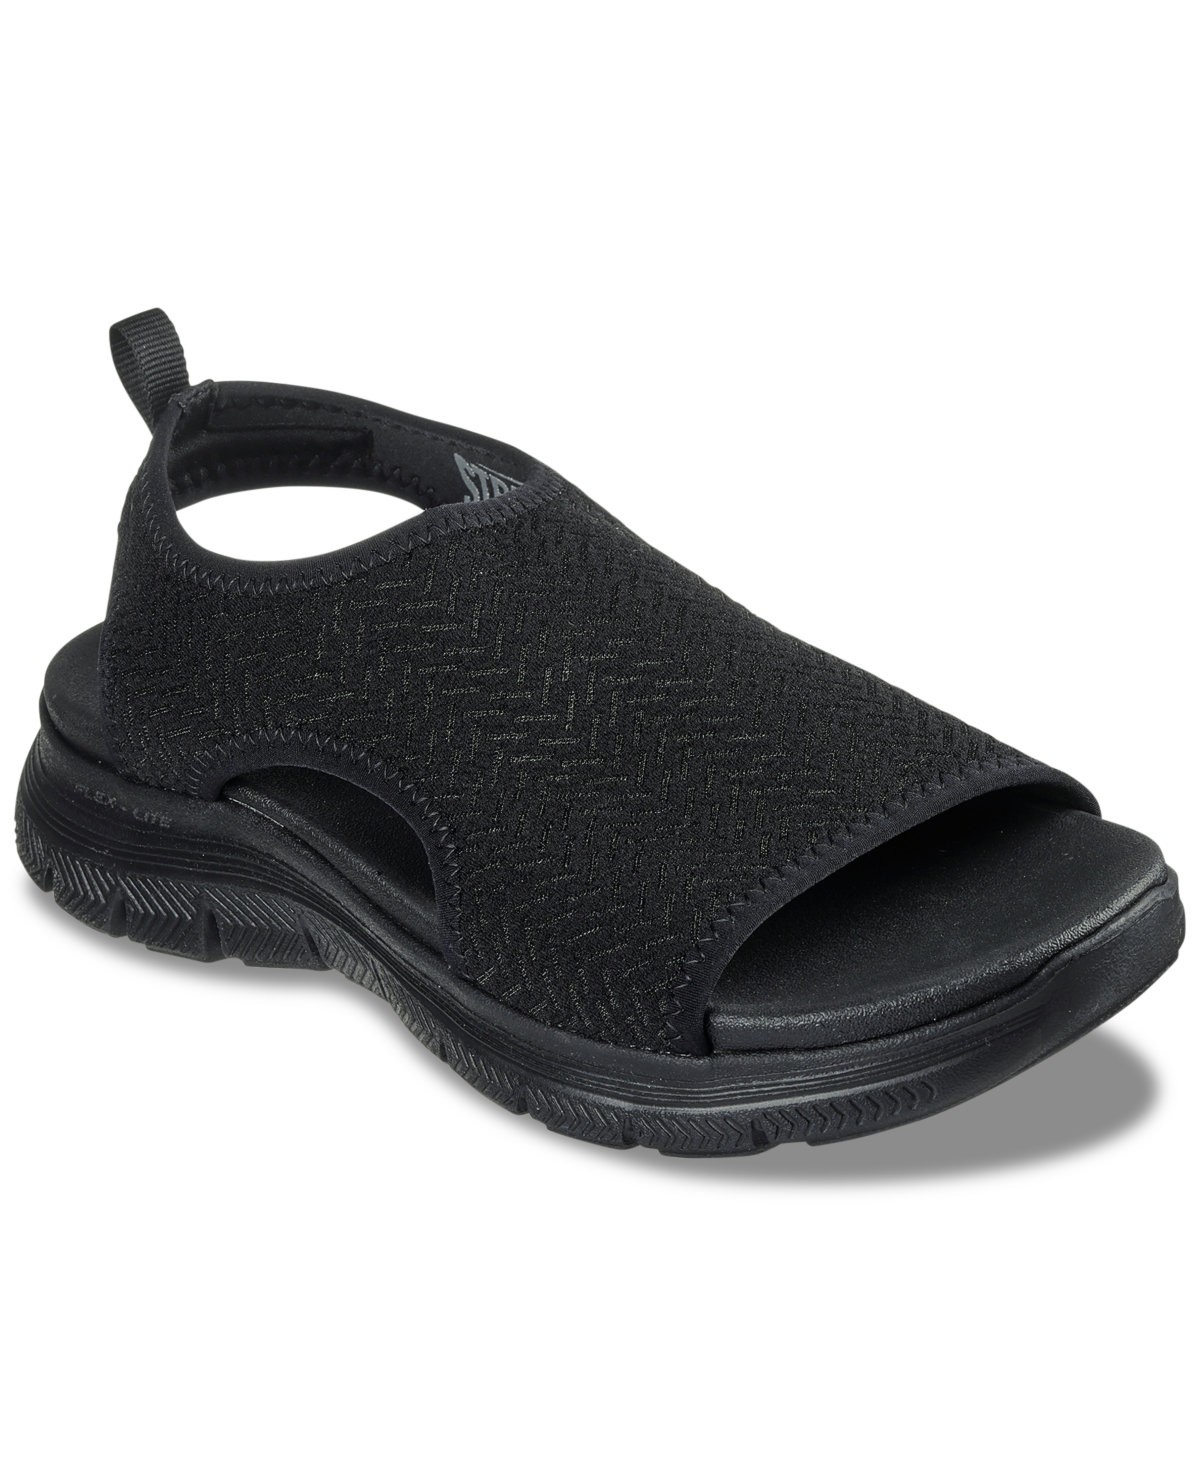 Women's Flex Appeal 4.0 - Livin in this Slip-On Walking Sandals from Finish Line - Mocha